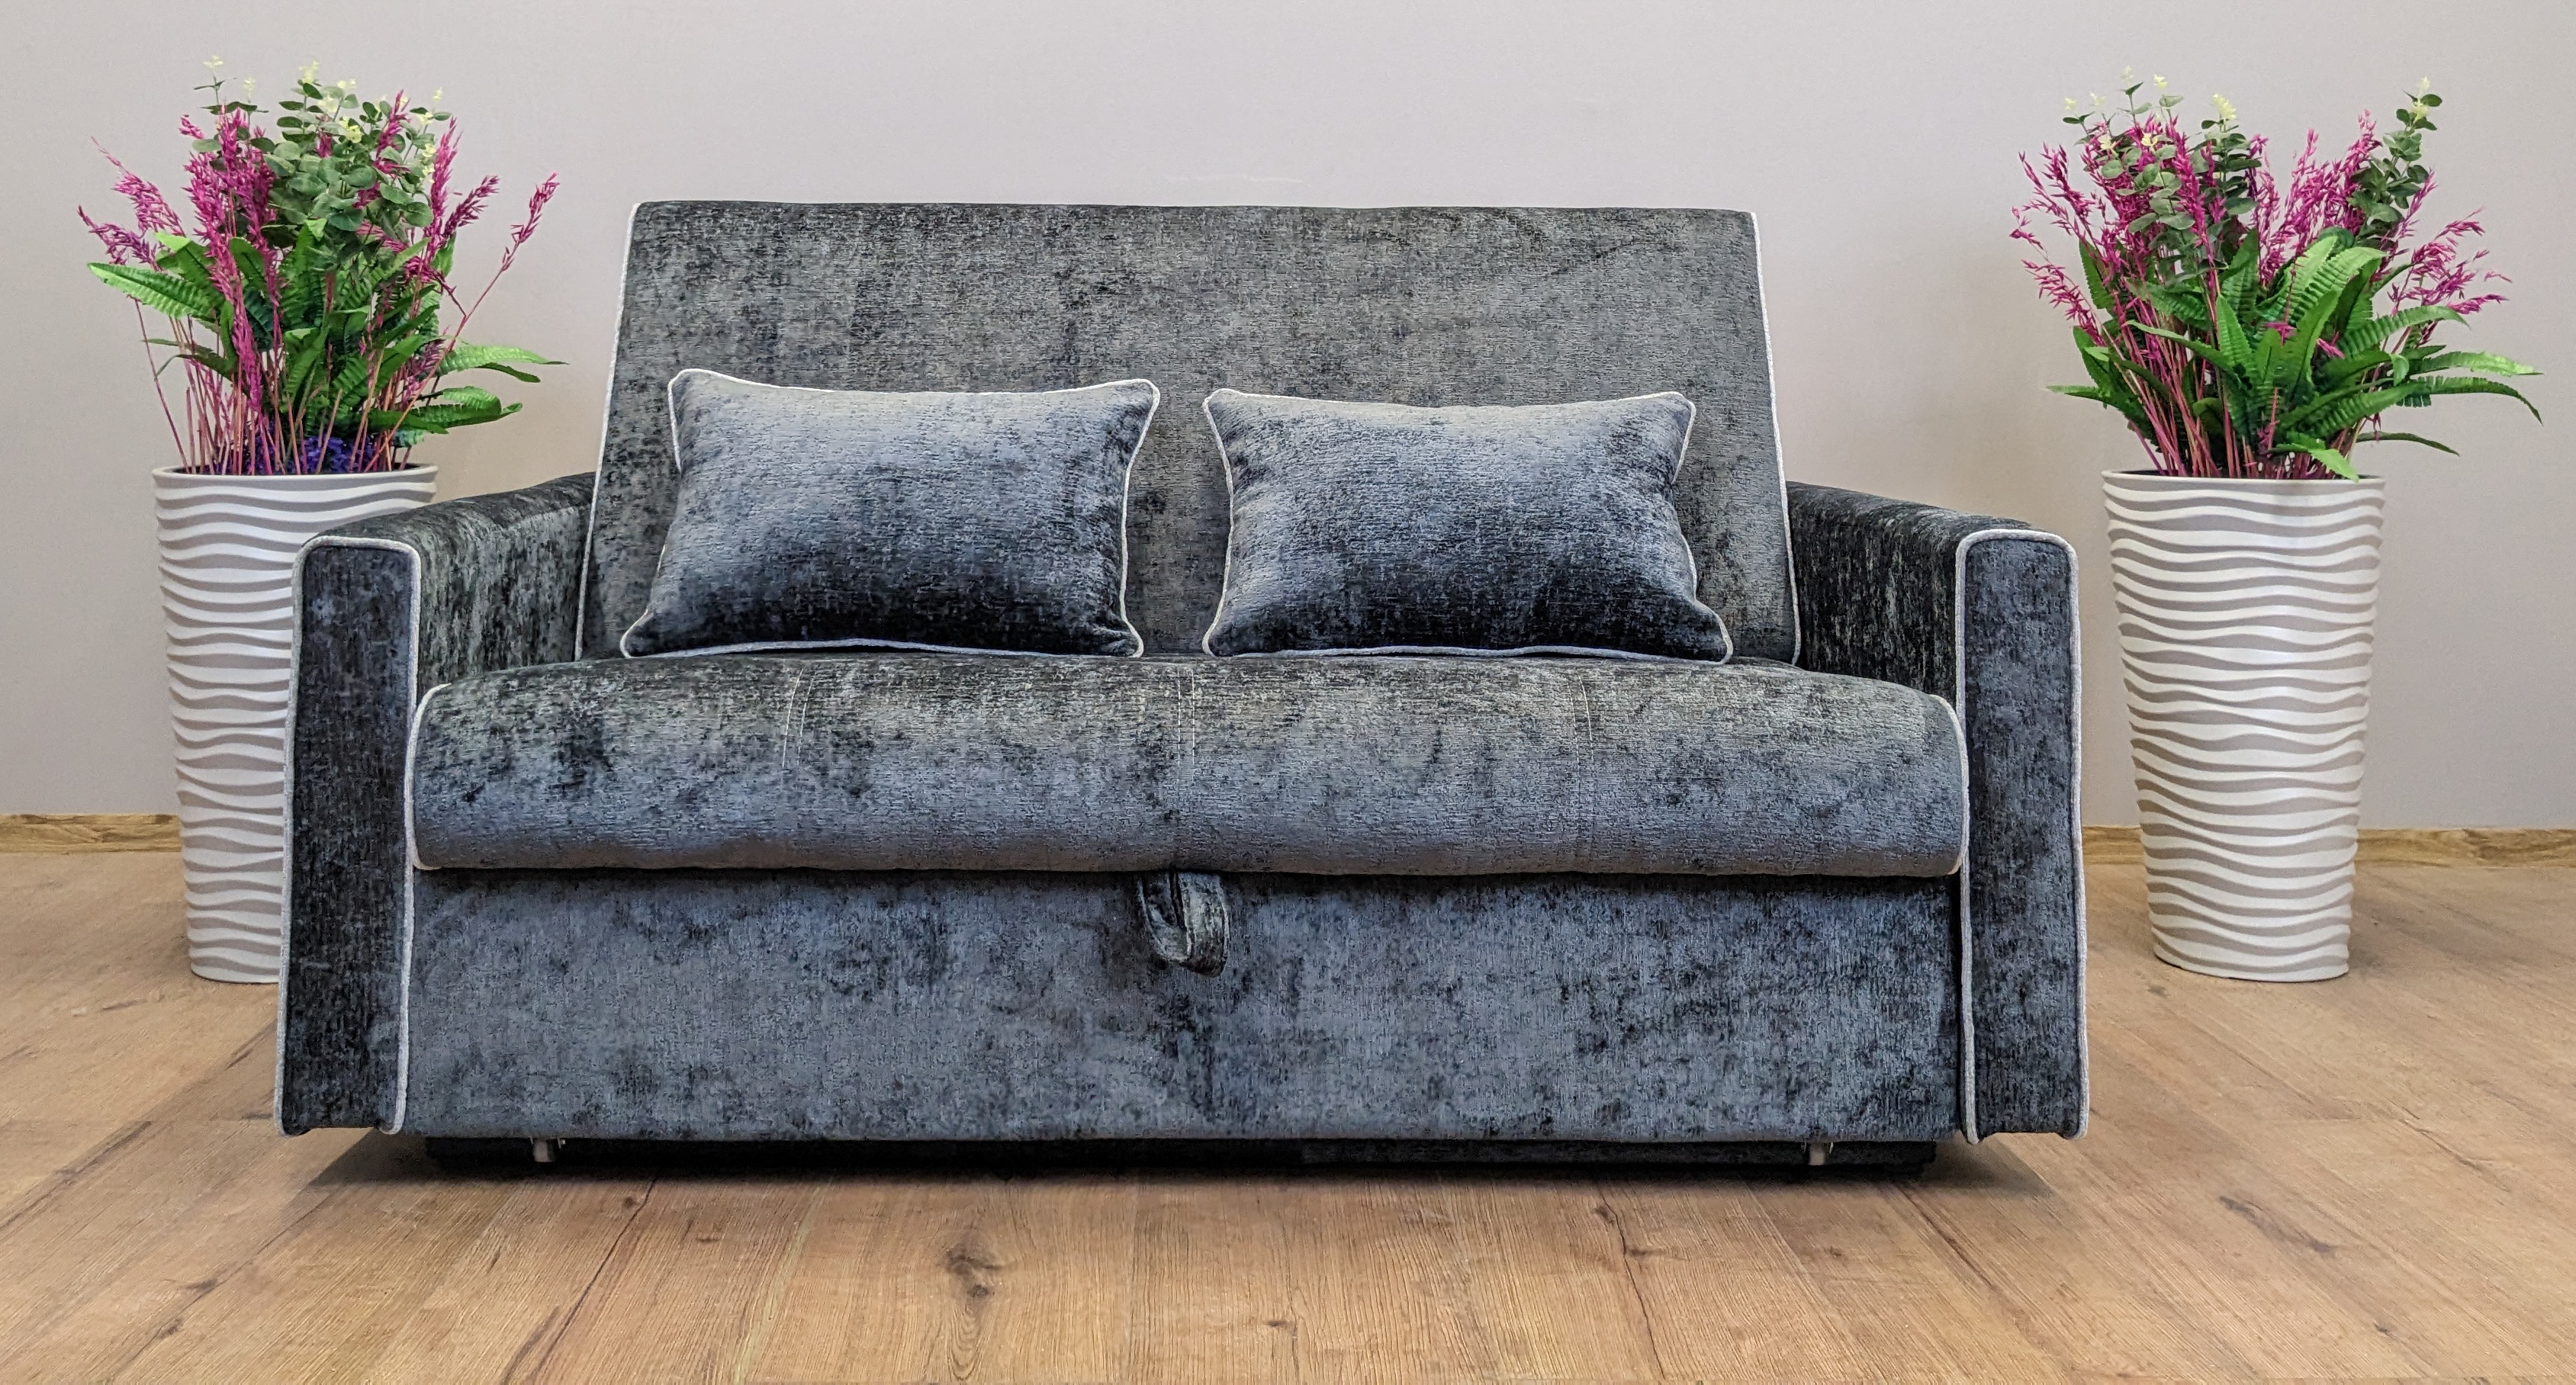 Купить диван Аккордеон в Самаре от производителя, цена, фото